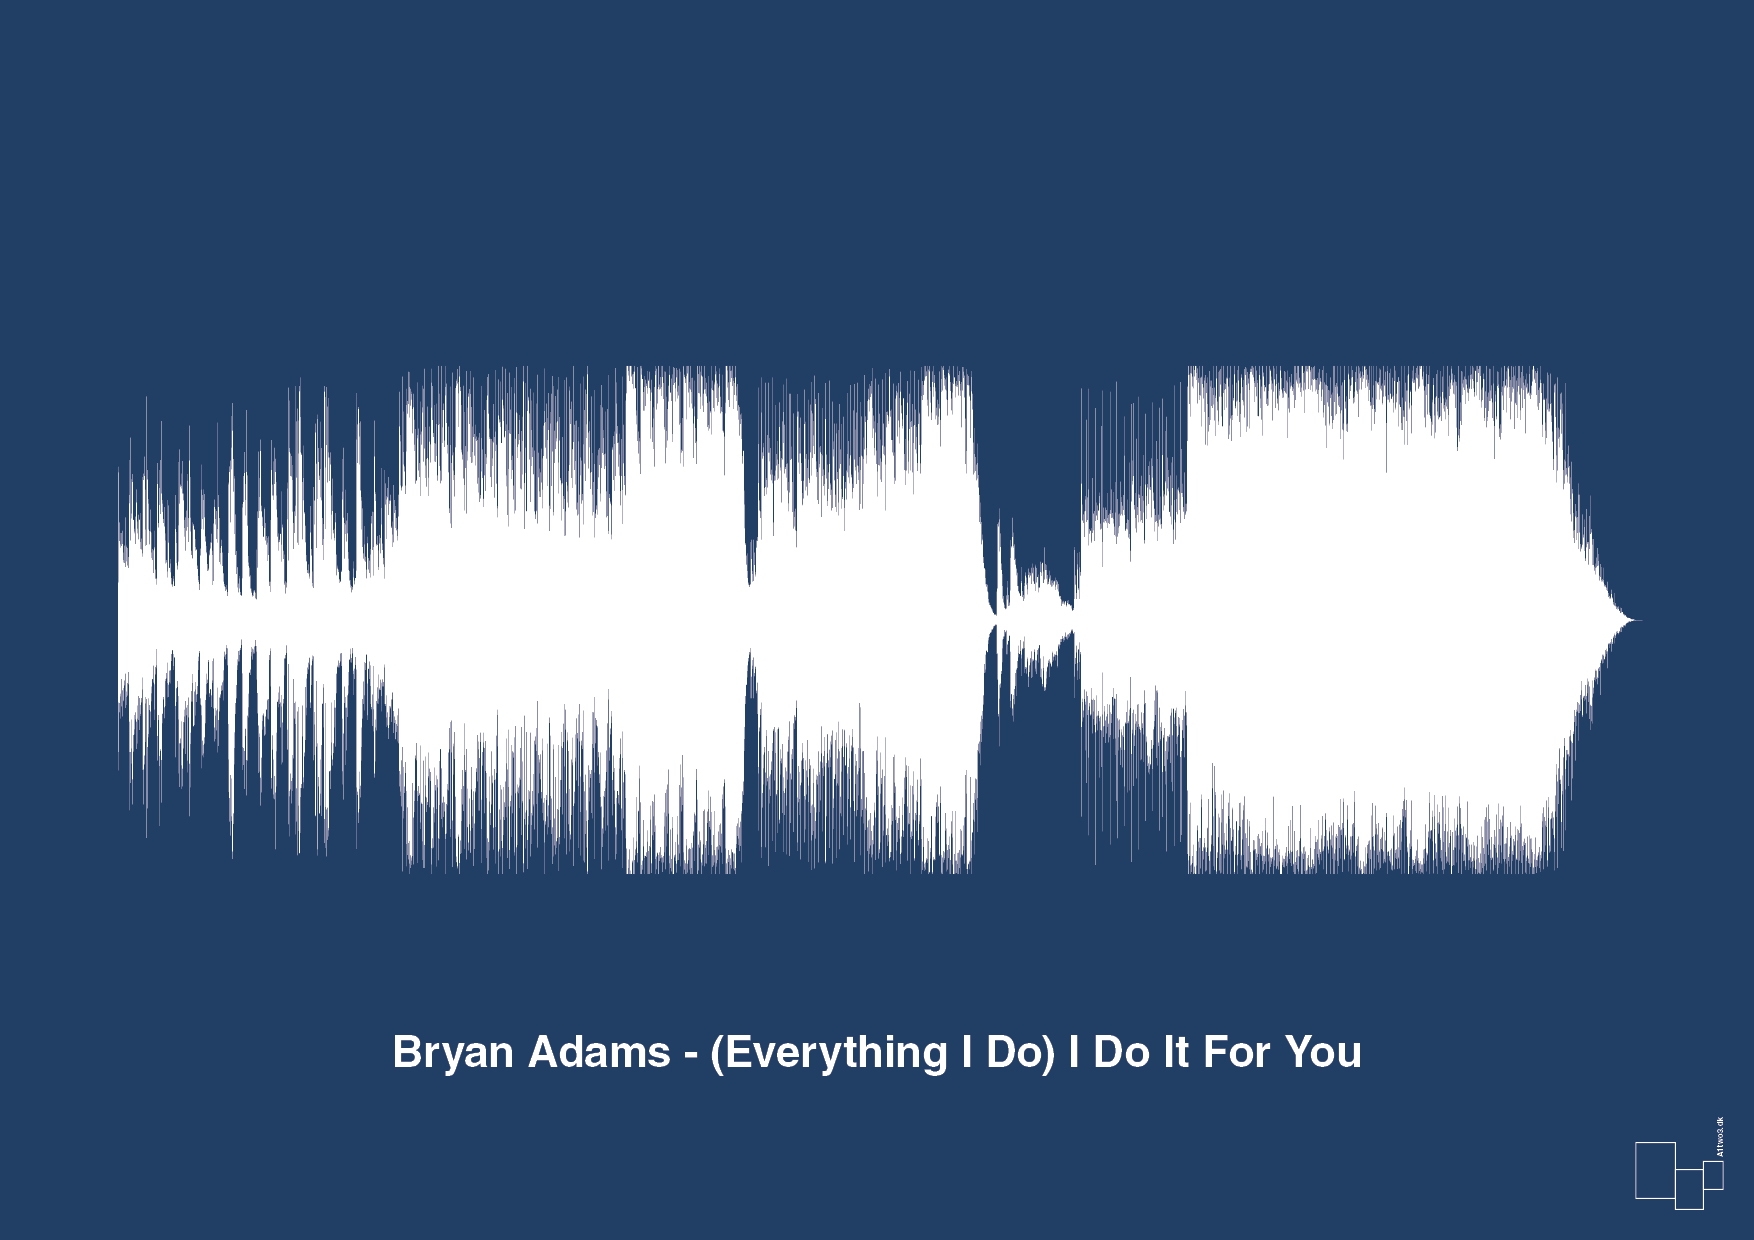 bryan adams - (everything i do) i do it for you - Plakat med Musik i Lapis Blue